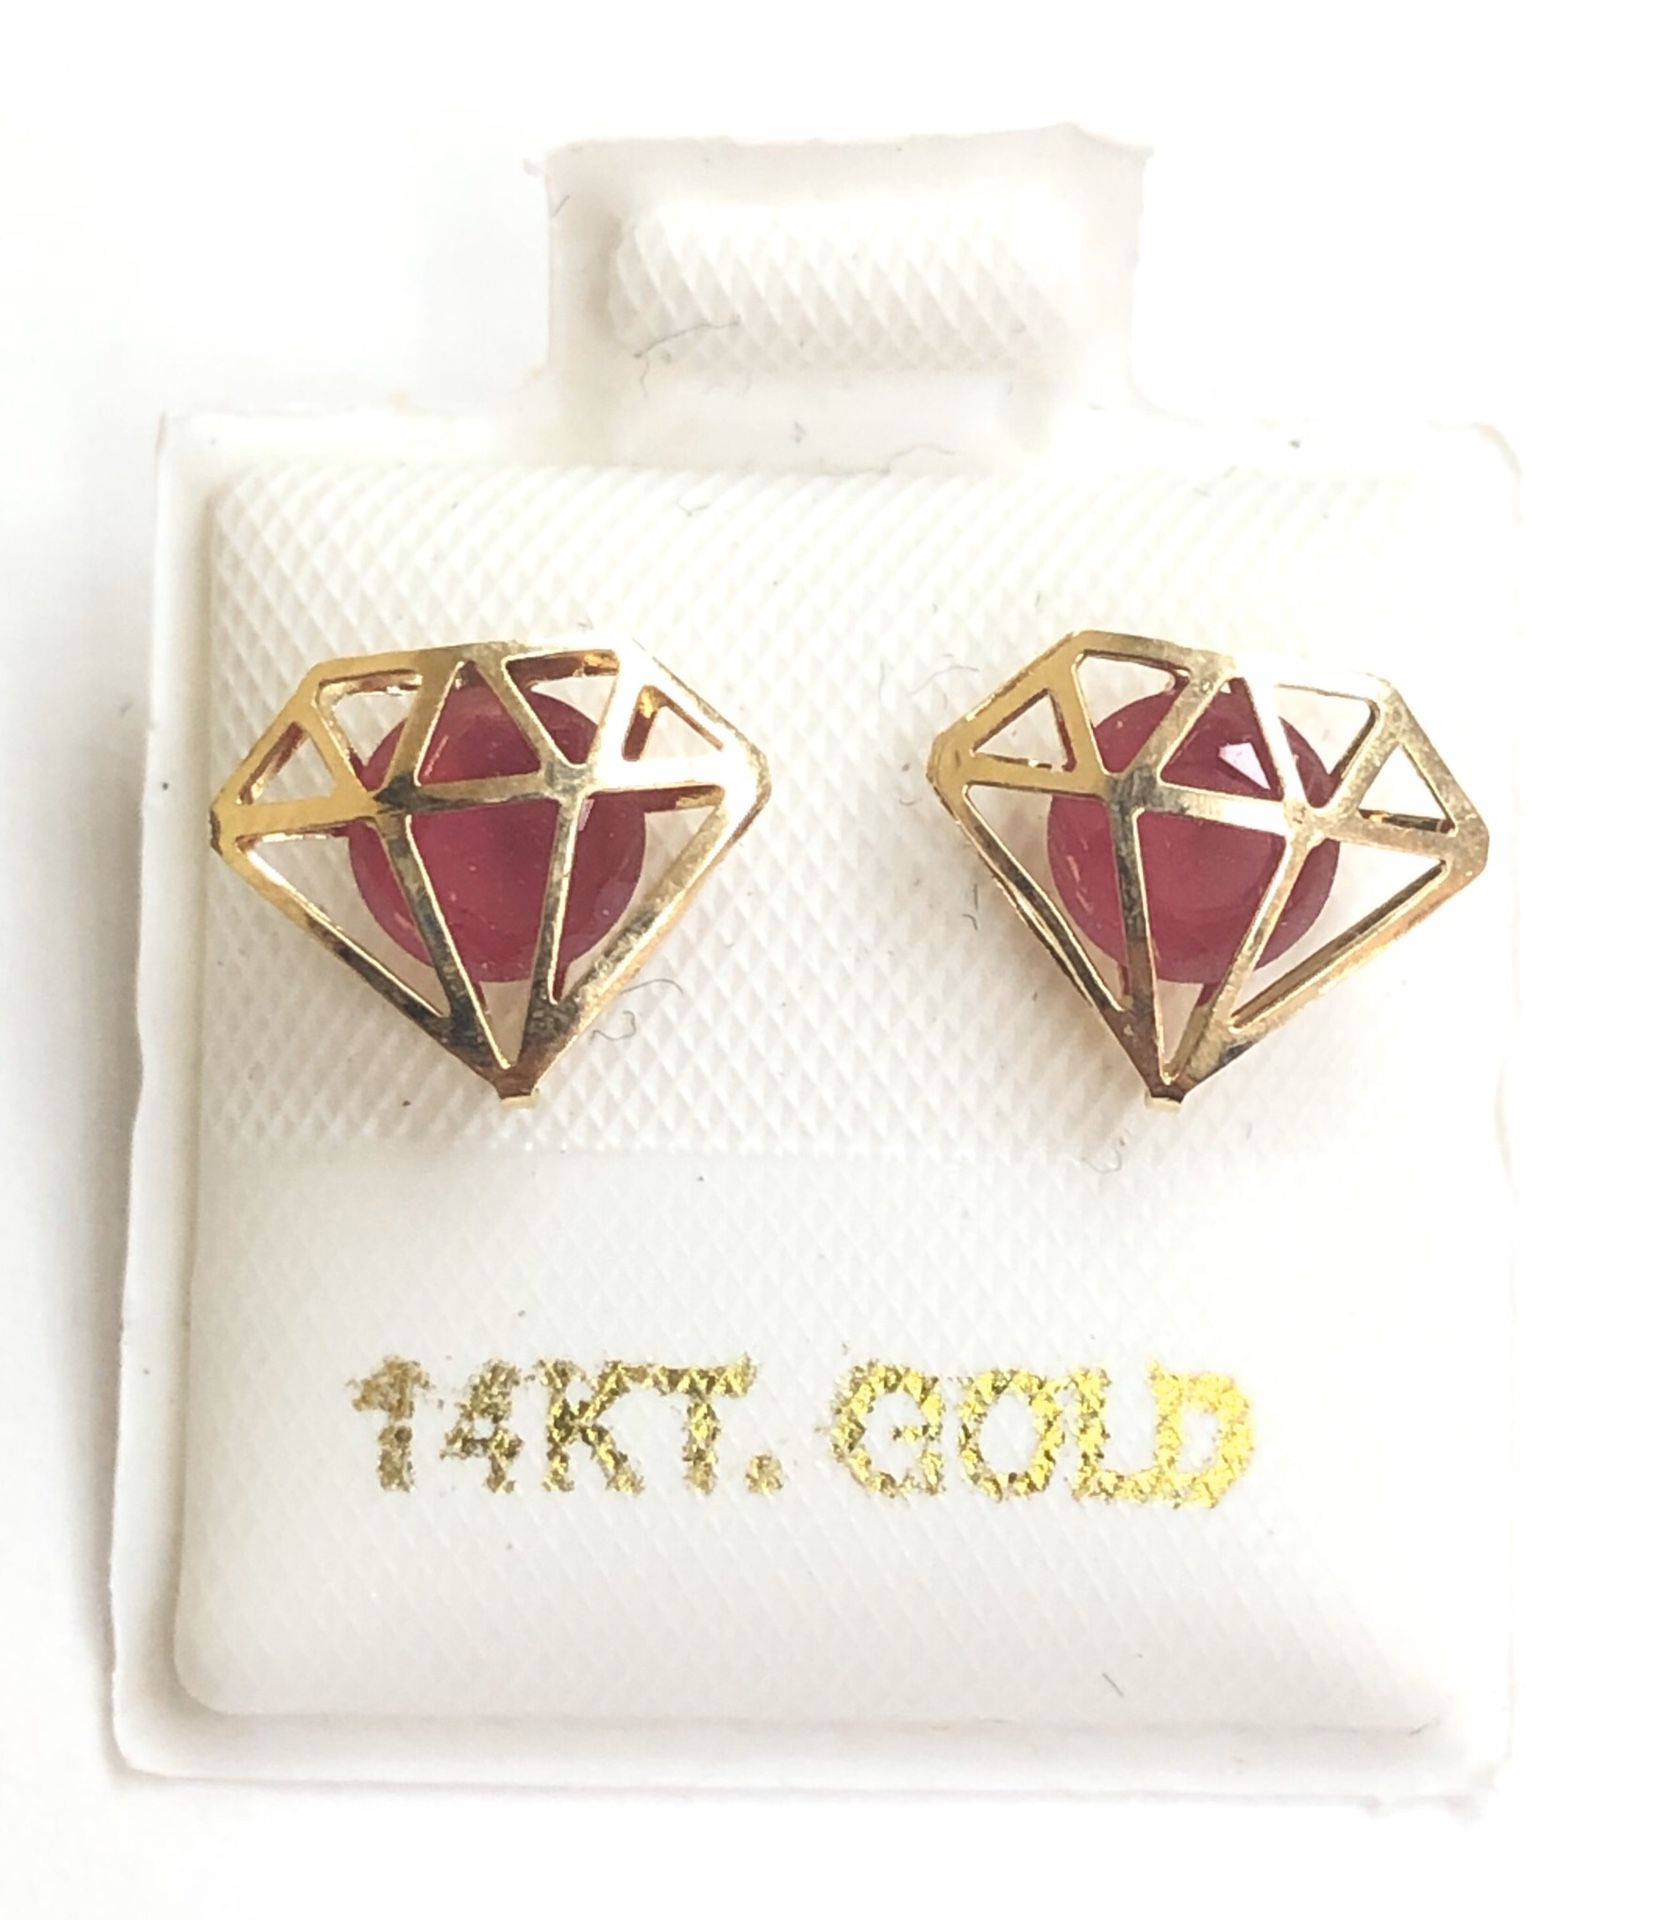 Beautiful Red stone diamond shape stud earring 14K REAL YELLOW GOLD. Description⬇️